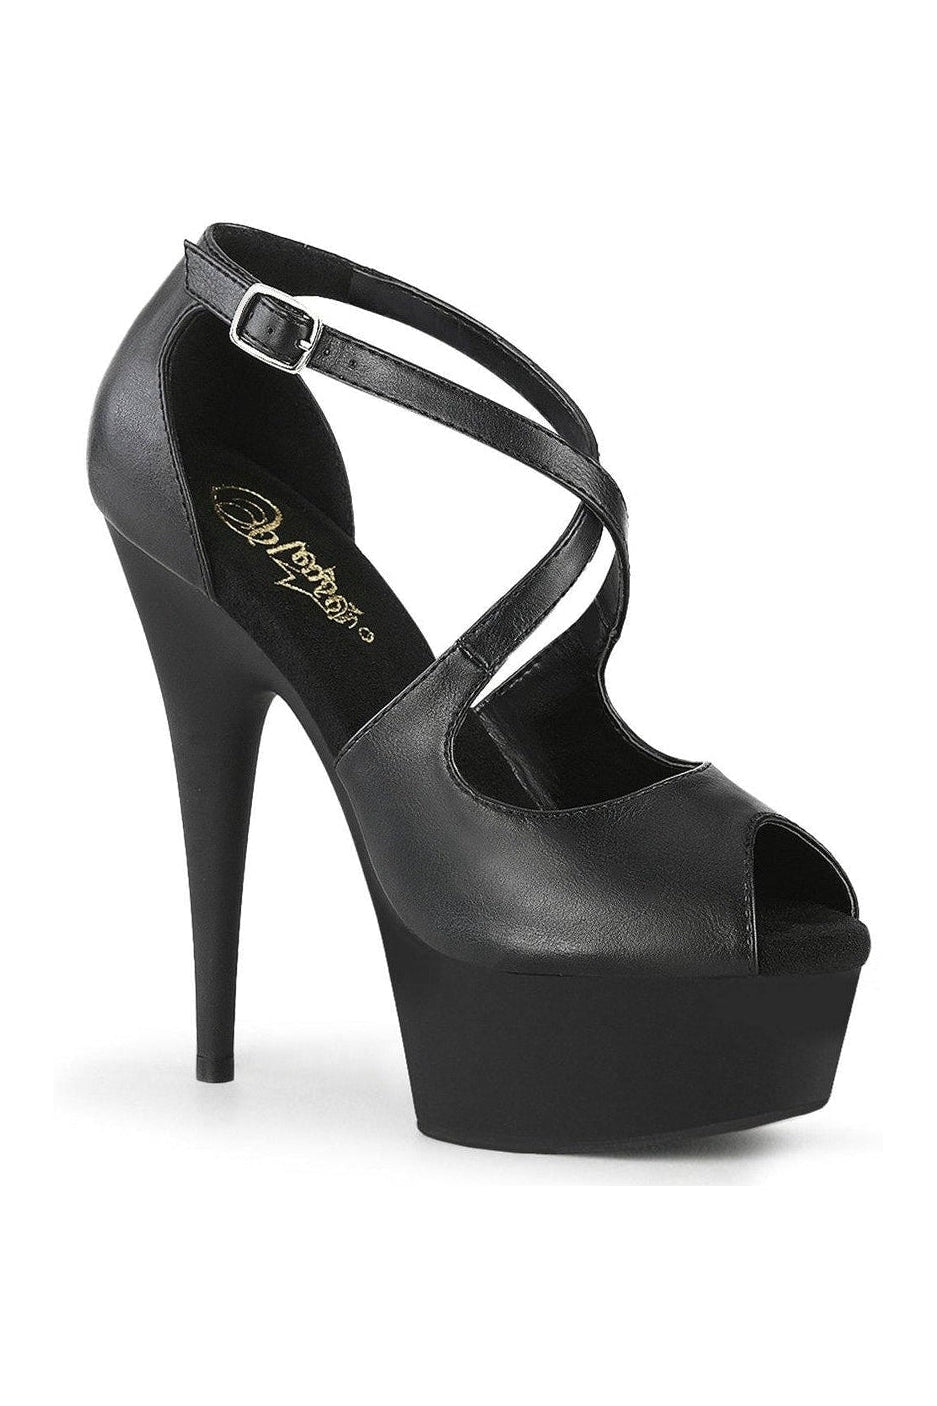 Pleaser Black Sandals Platform Stripper Shoes | Buy at Sexyshoes.com